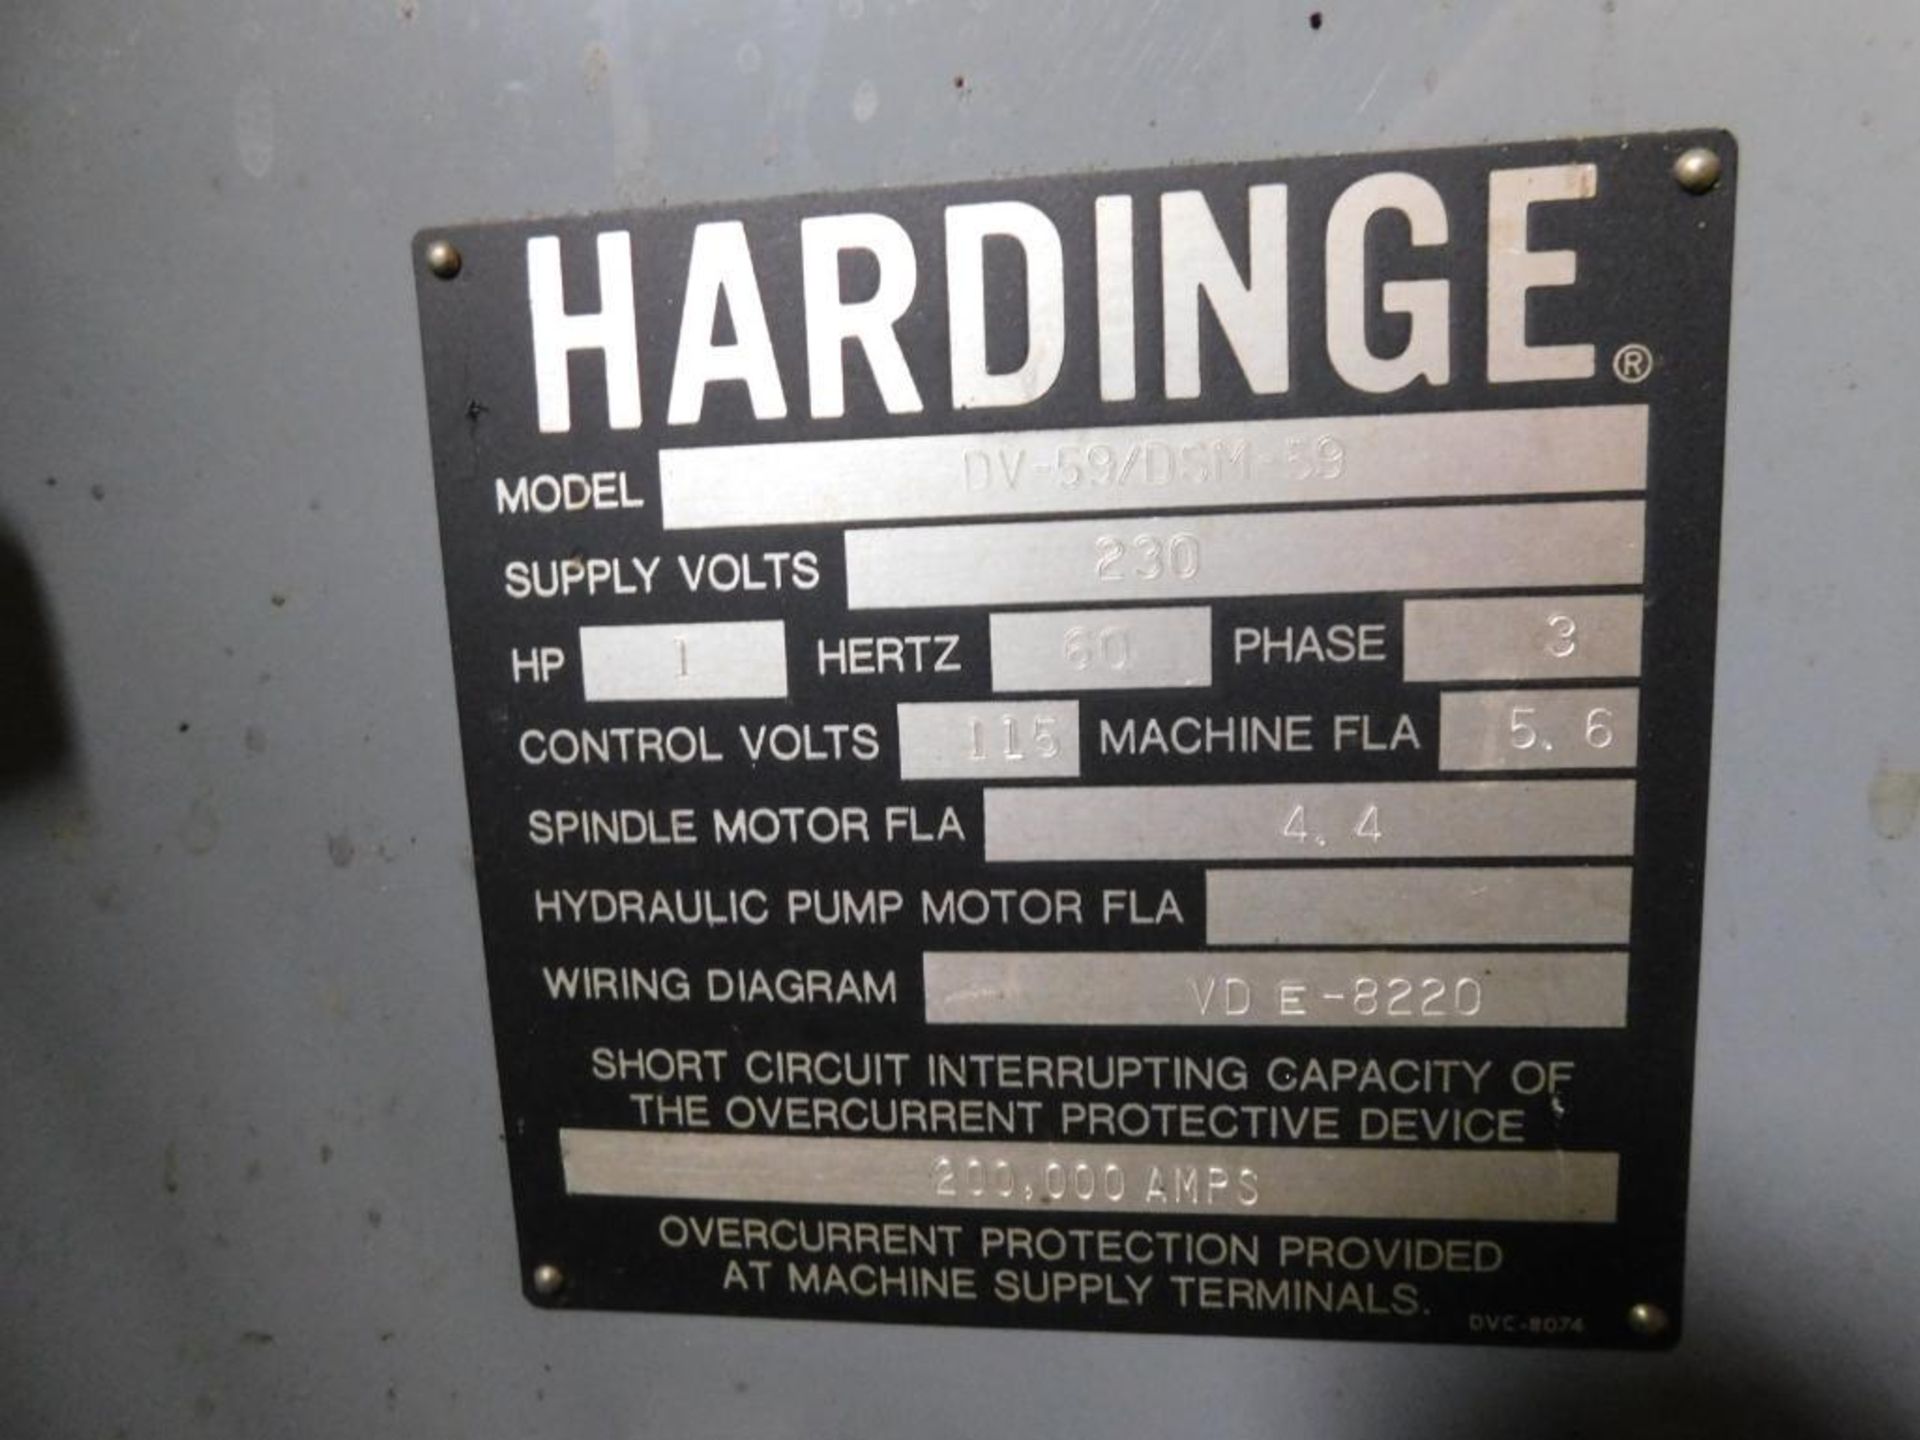 Hardinge DV-59/DSM-59 60" Lathe, 1 HP, 8" Swing, 16" Distance Between Centers - Image 13 of 14